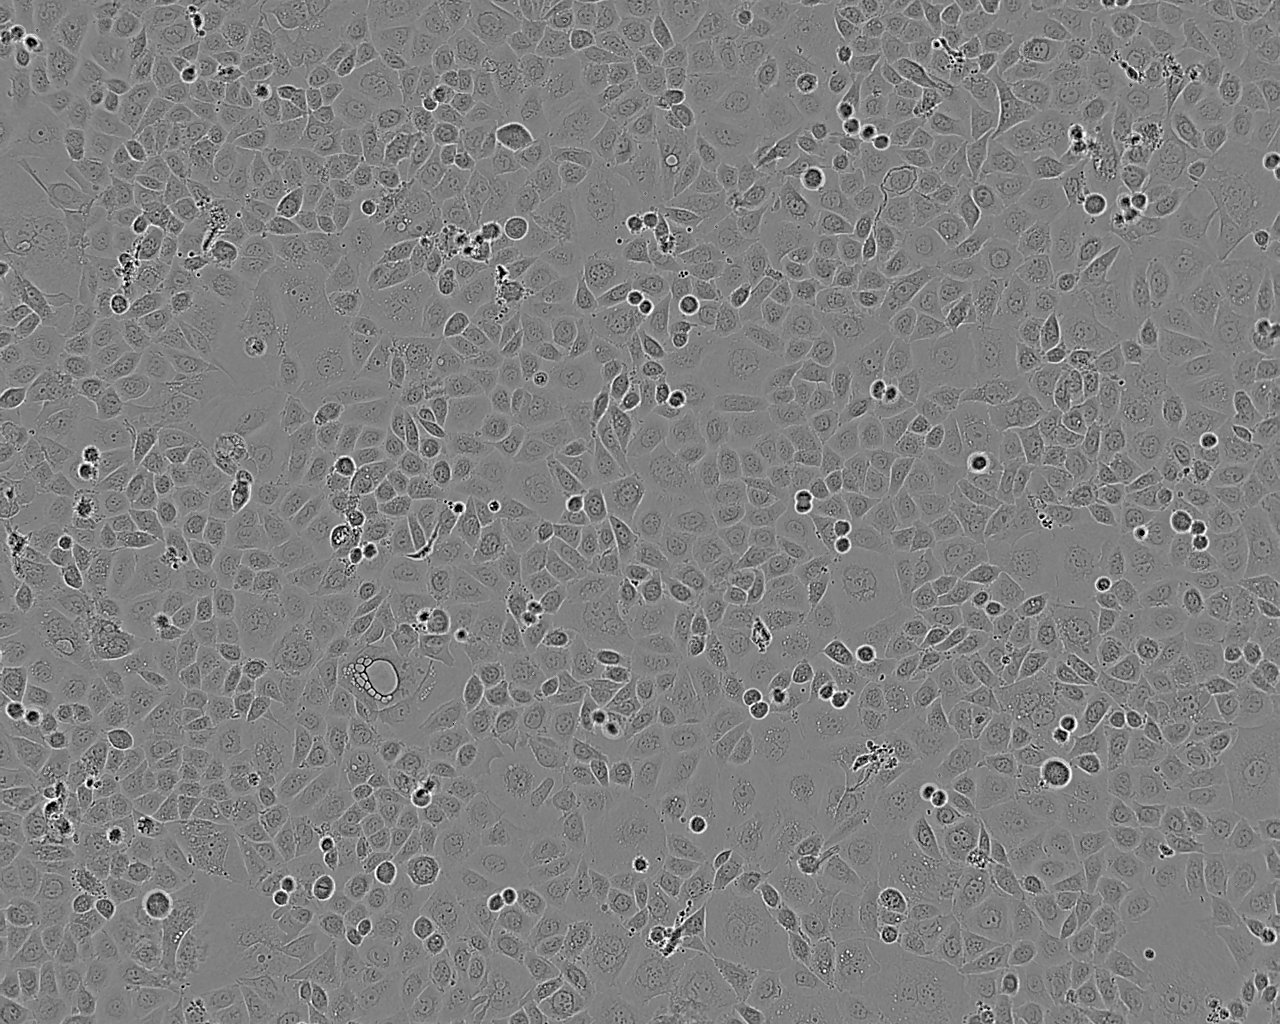 ATDC-5 小鼠胚胎瘤细胞系